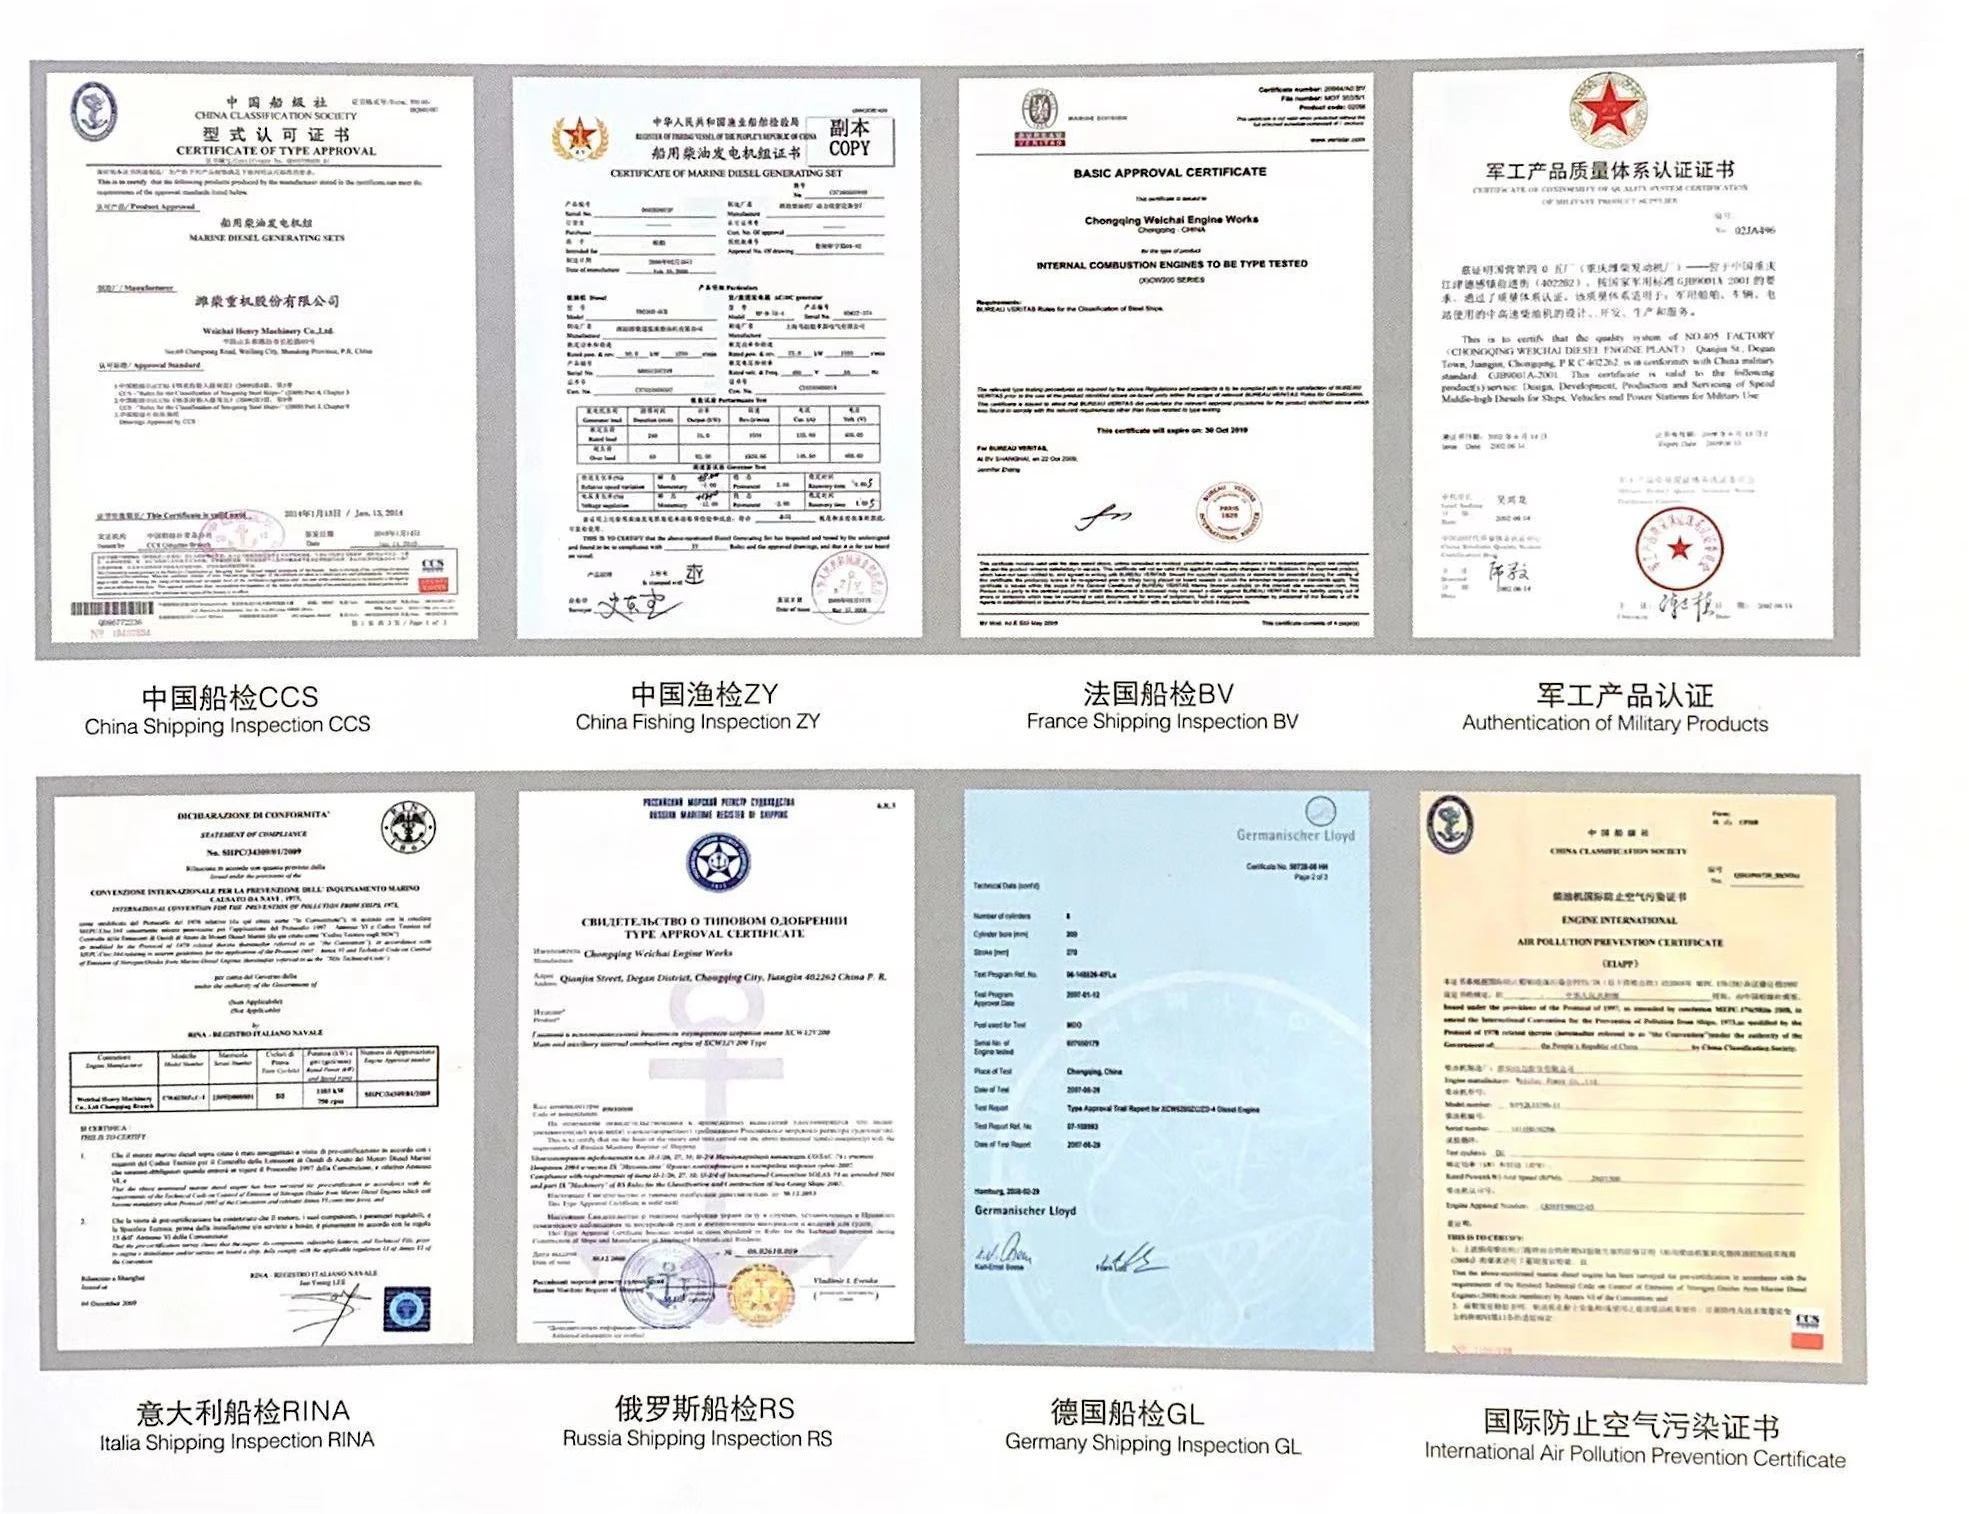  certificates.jpg